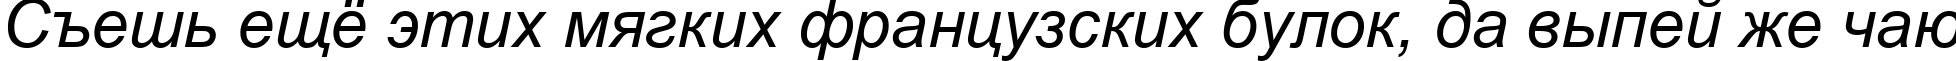 Пример написания шрифтом Arial Cyr Italic текста на русском